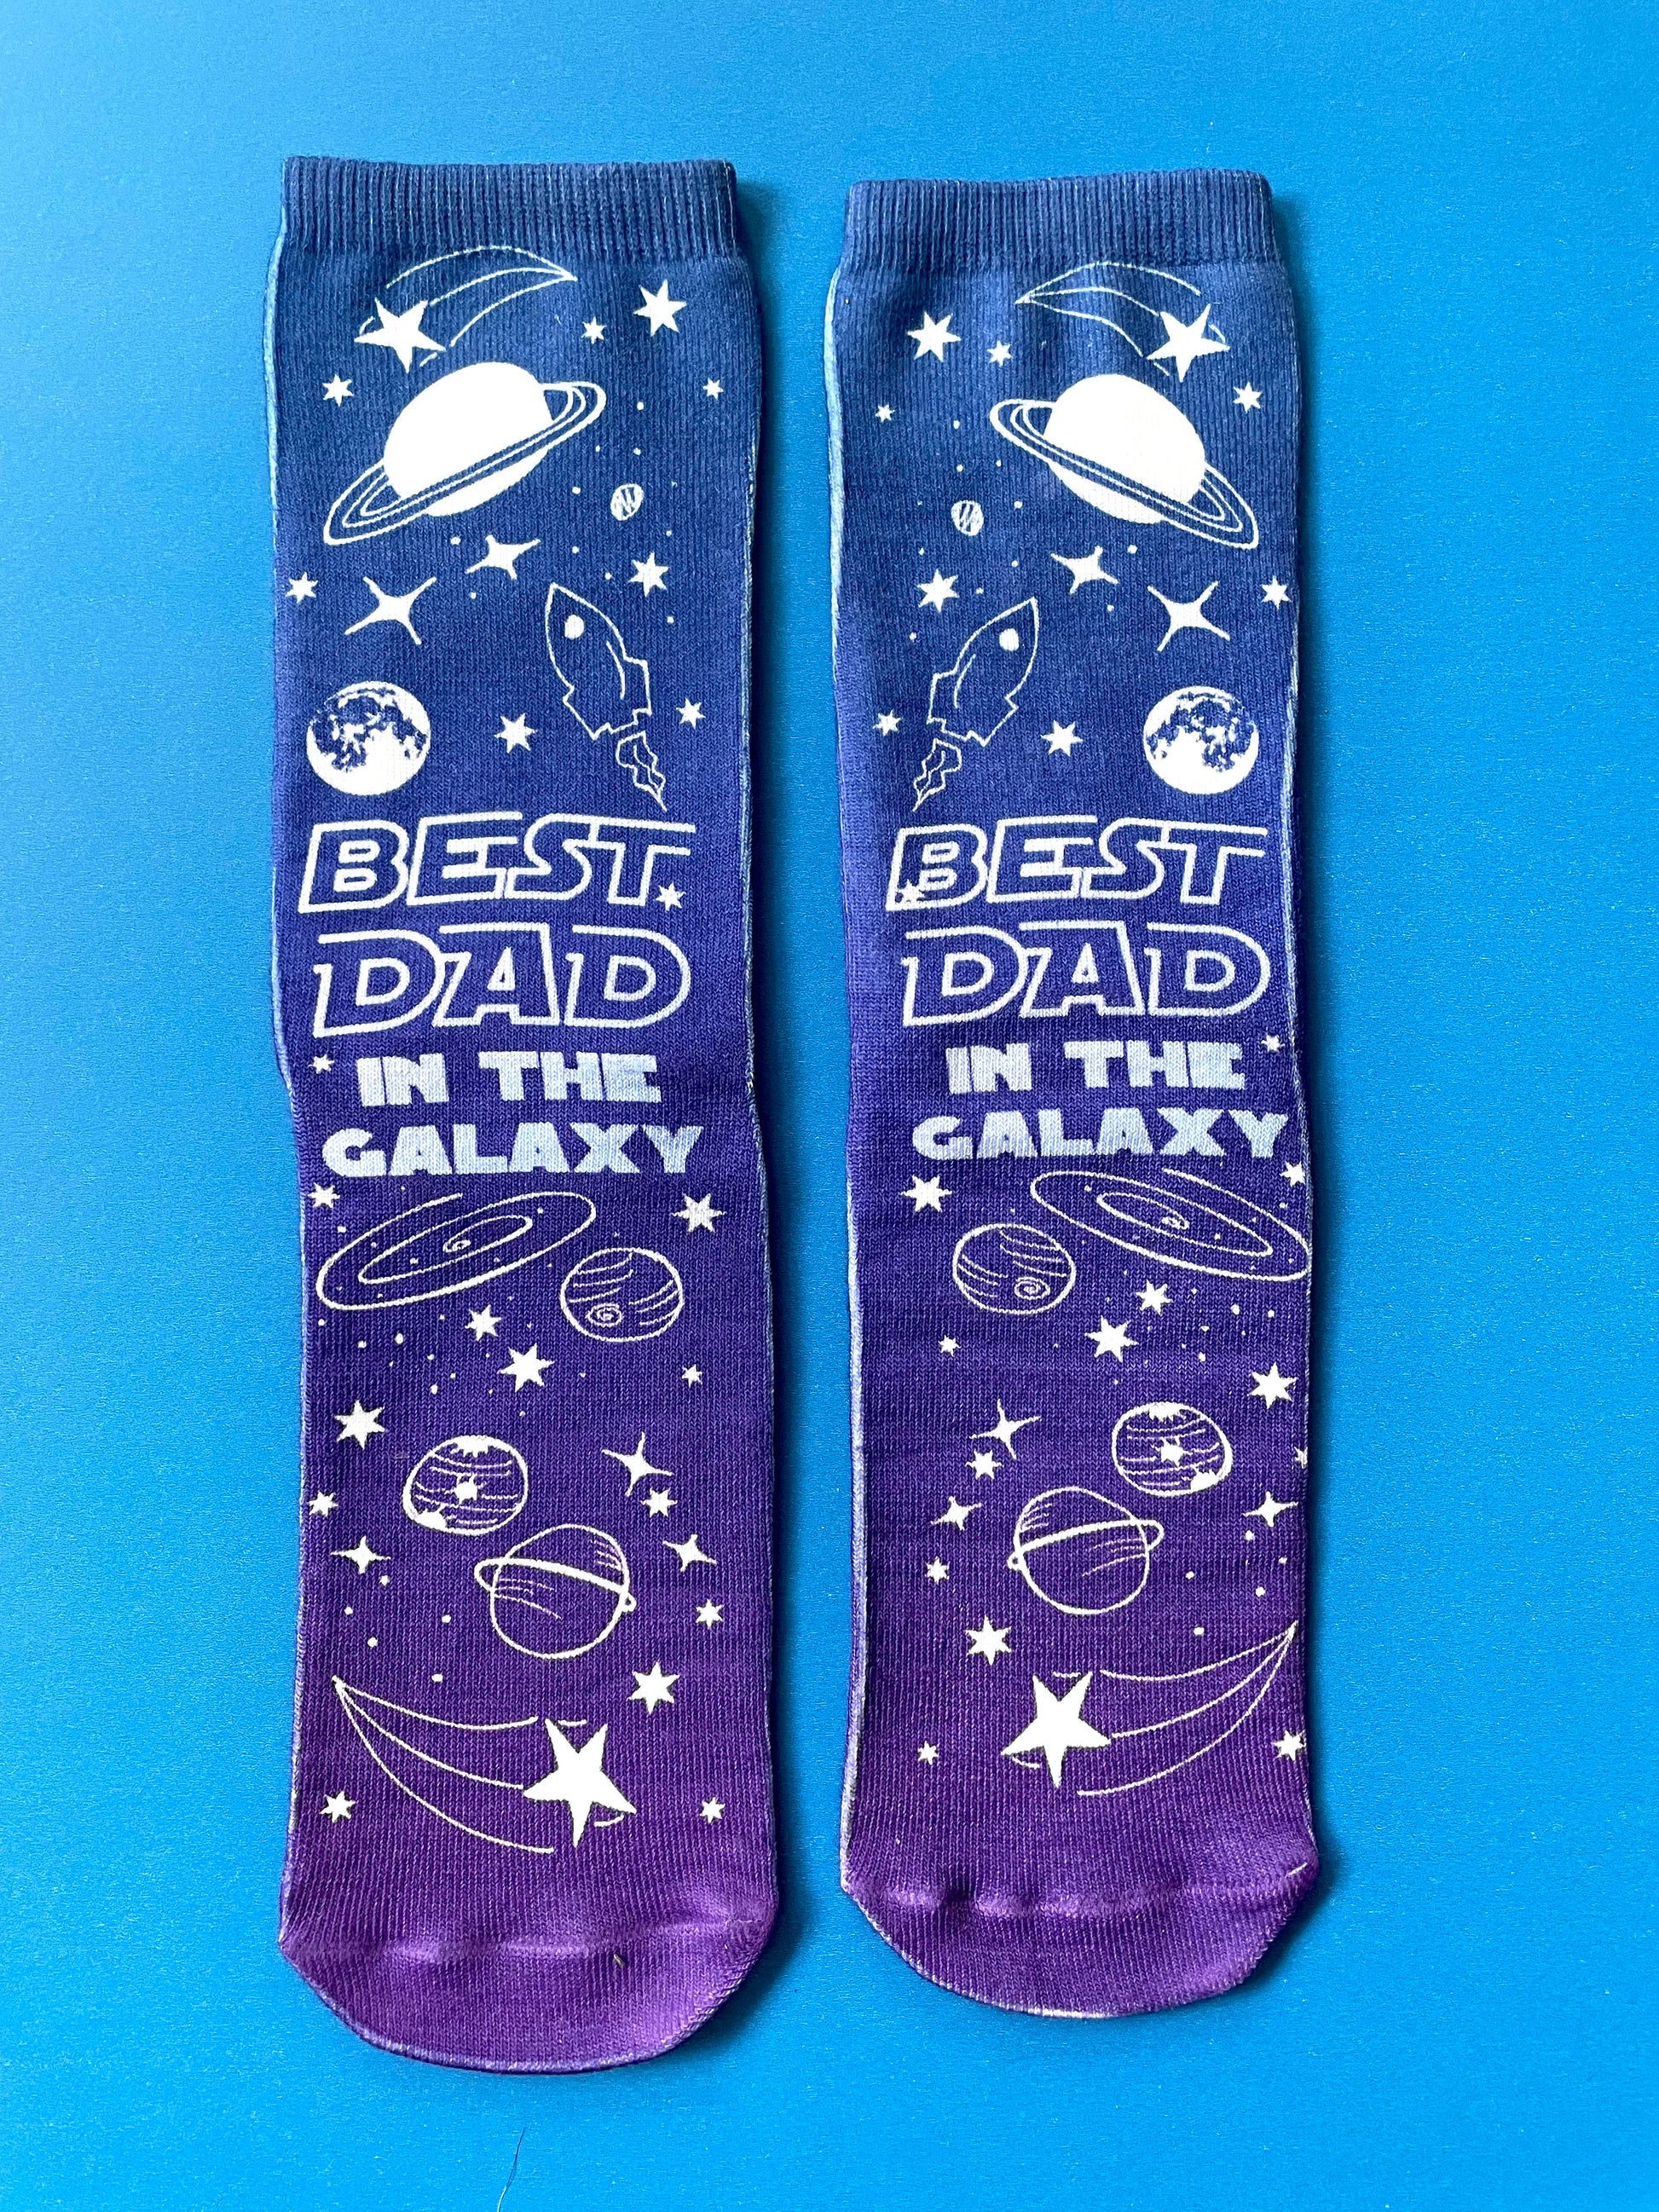 Best Dad In The Galaxy - Novelty Socks - MoonlightMakers